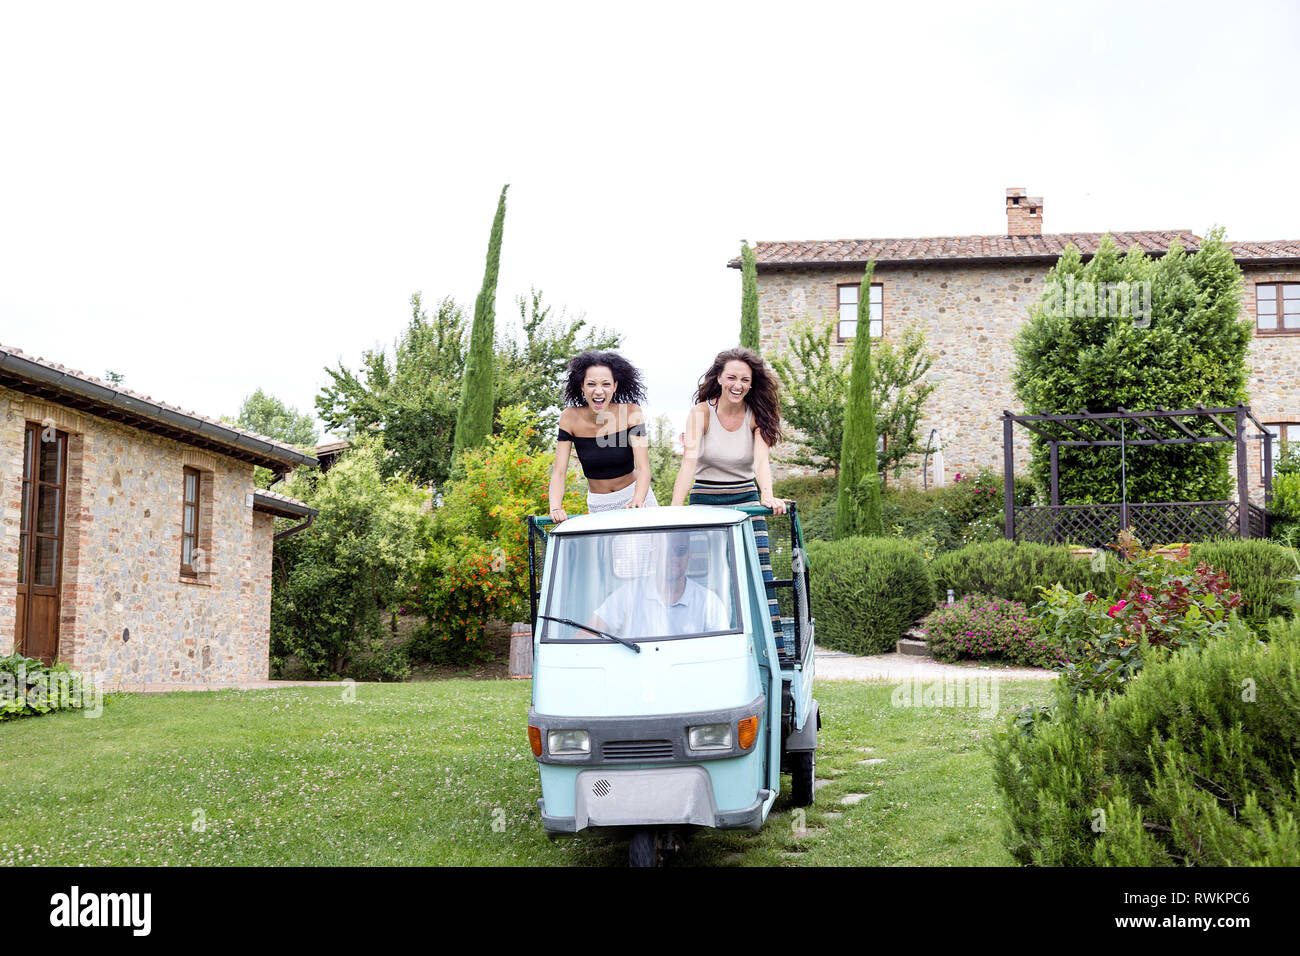 Friends on three-wheeler vehicle, Città della Pieve, Umbria, Italy Stock Photo